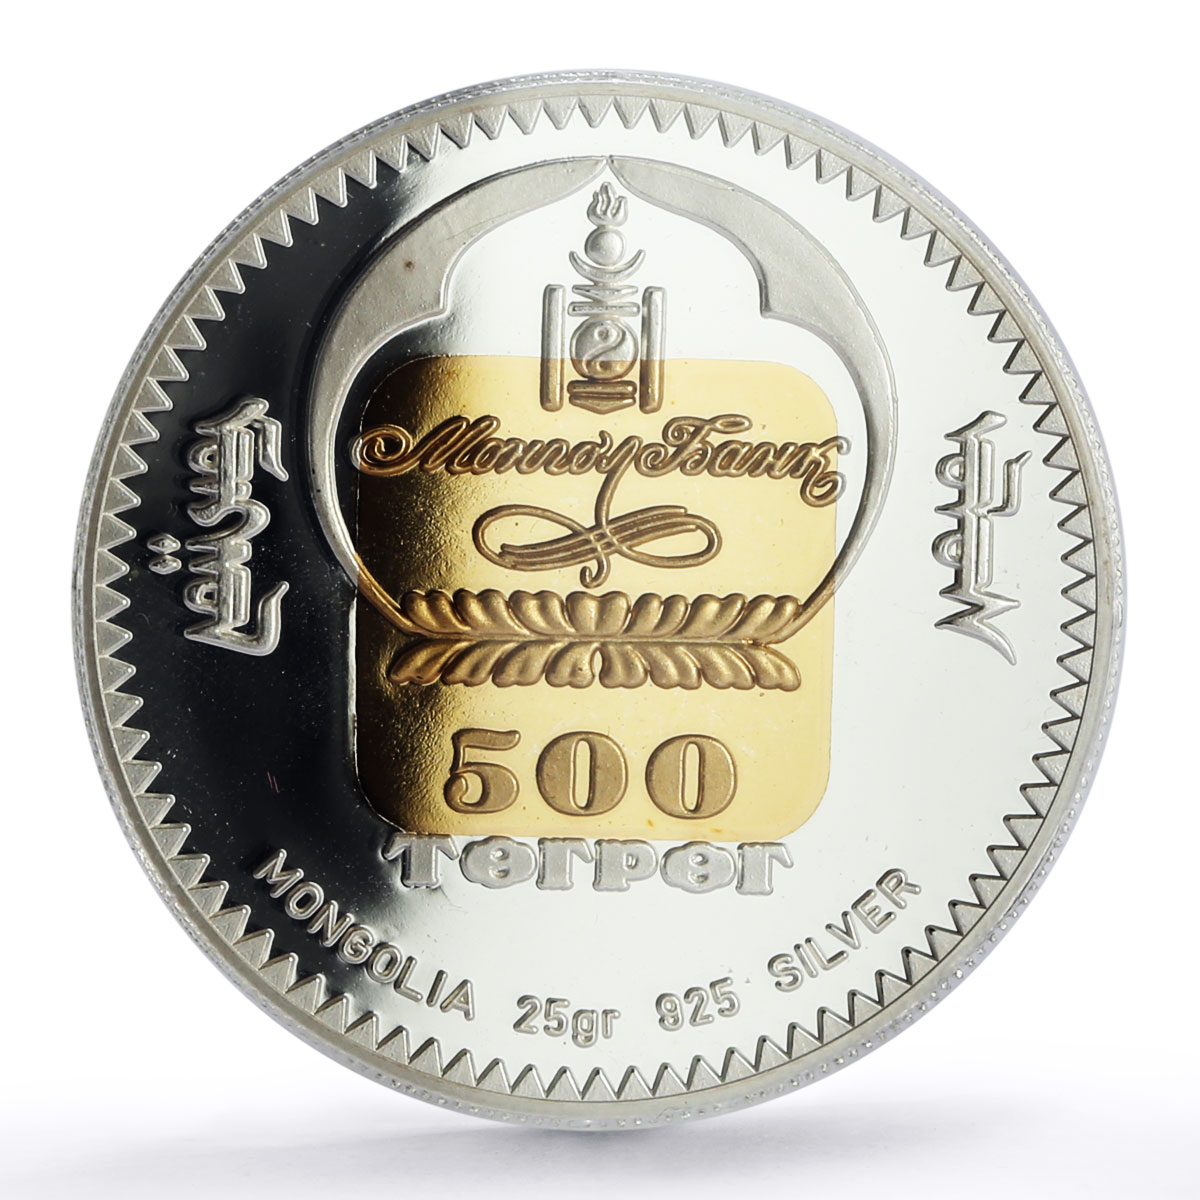 Mongolia 500 togrog Thomas Edison Lightbulb Telephone PR69 PCGS silver coin 1999